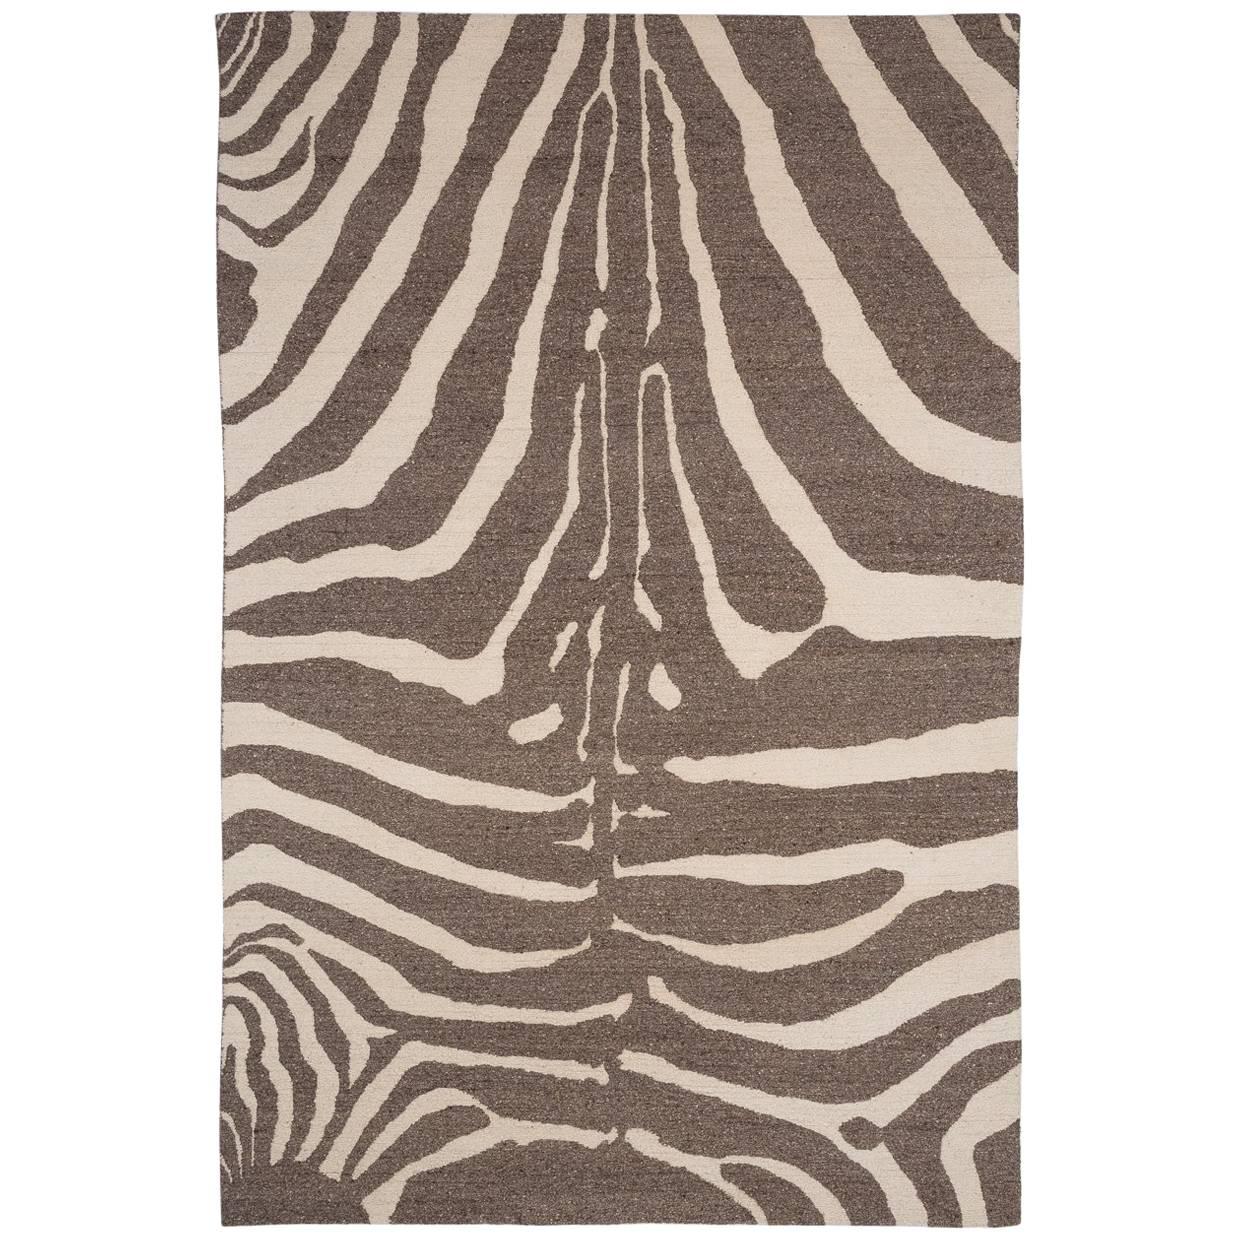 Zebra Design Brocade Weave Area Rug in Grey and White Wool